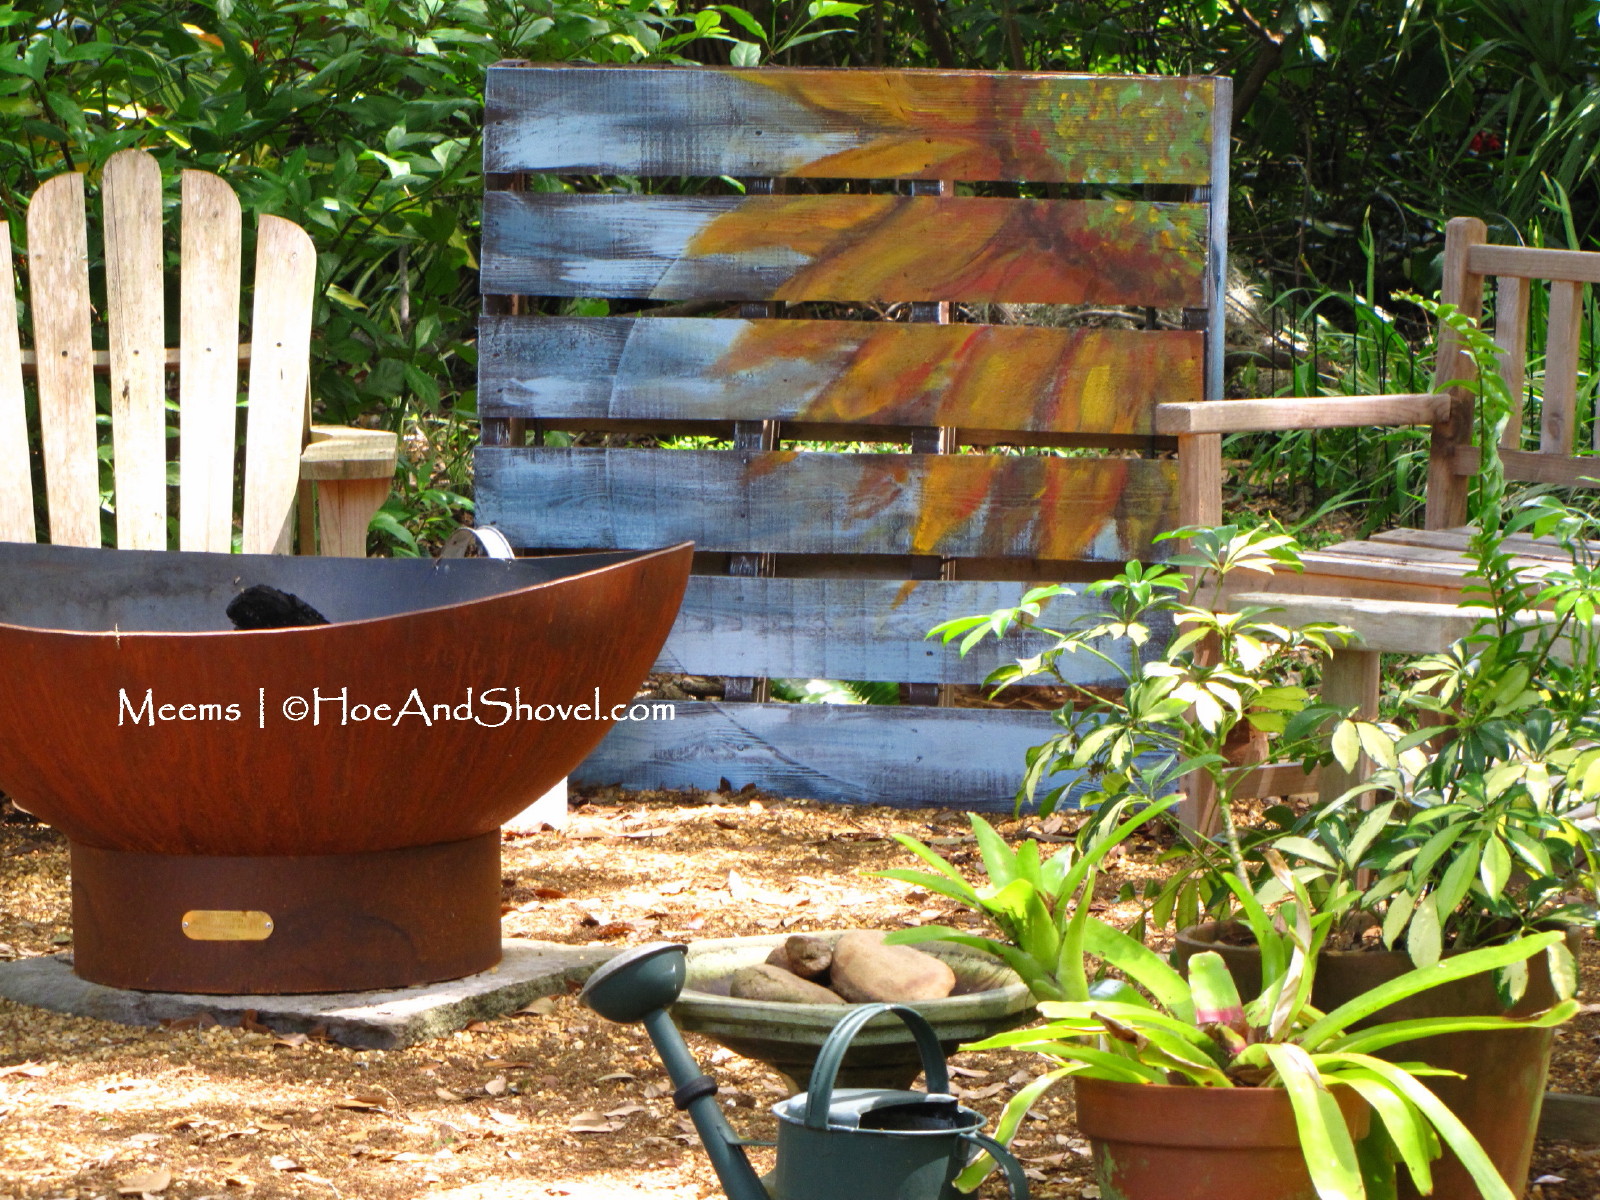 Hoe And Shovel Upcycled Wooden Pallet Garden Art